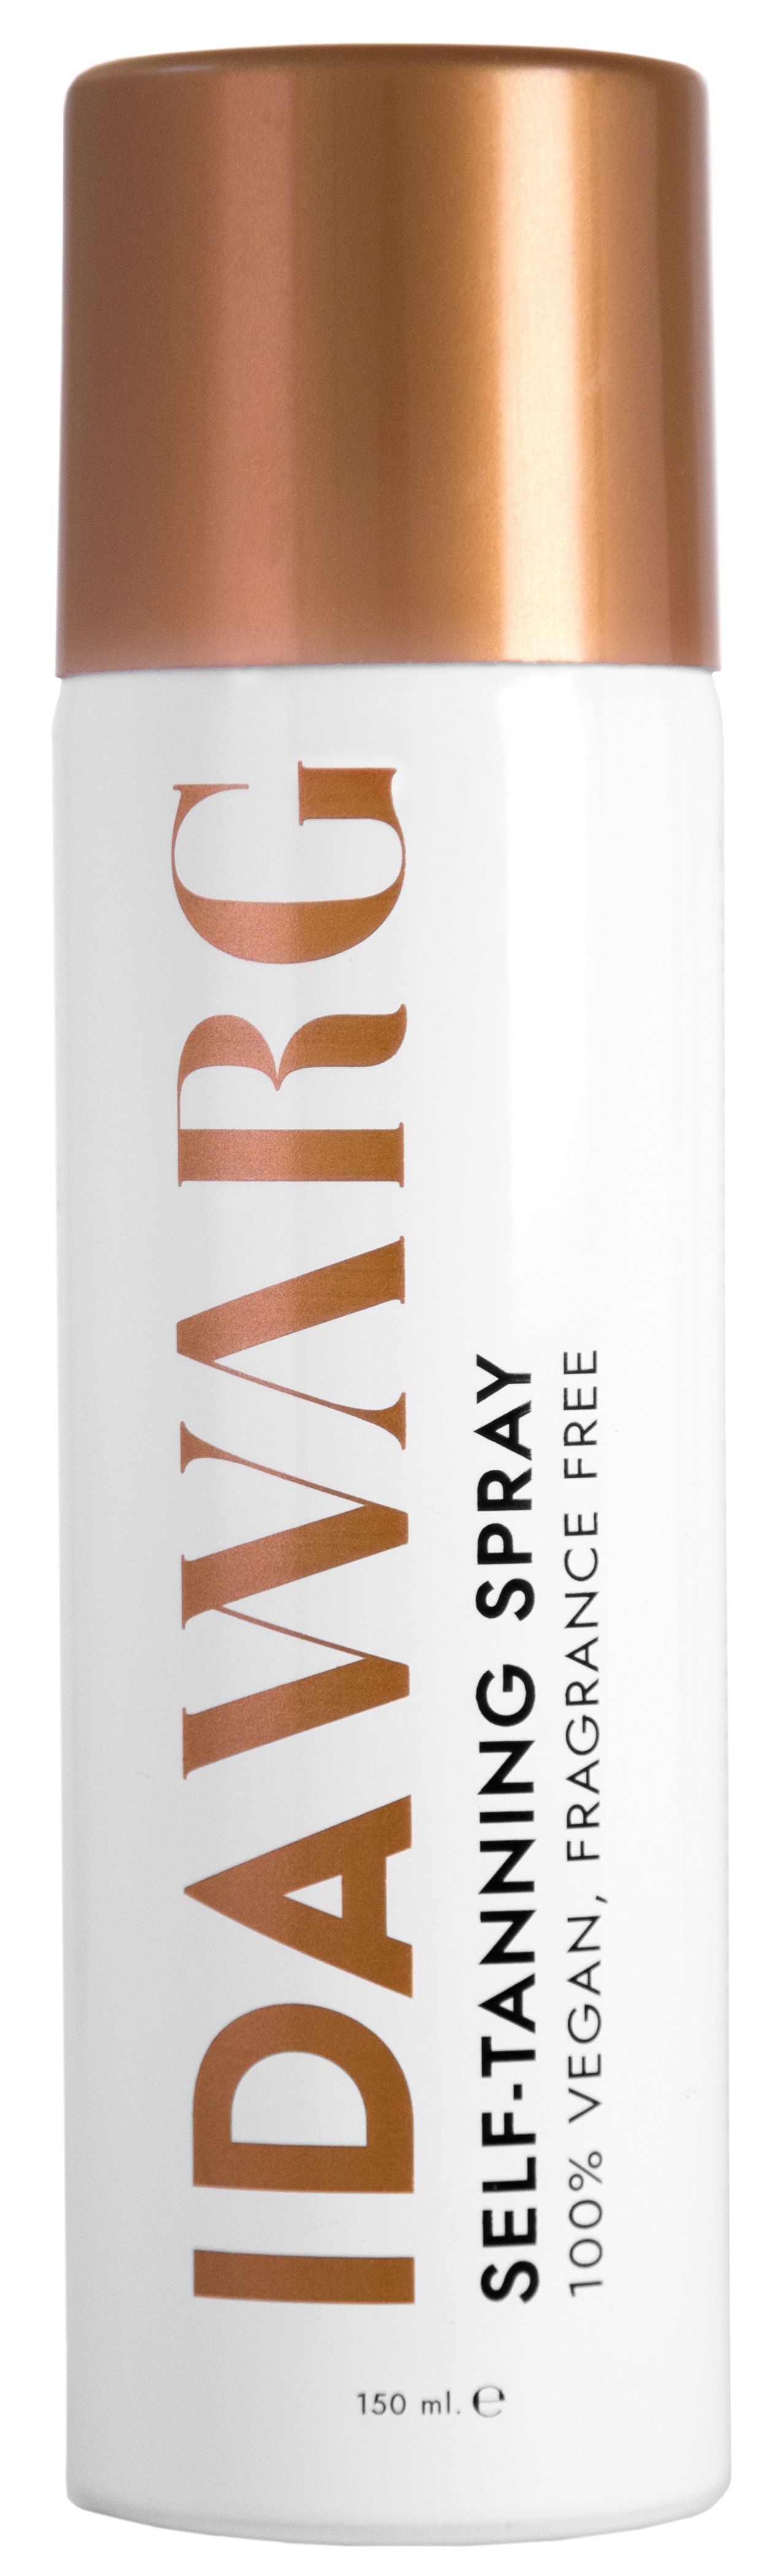 Ida Warg Beauty Self-Tanning Spray 150 ml